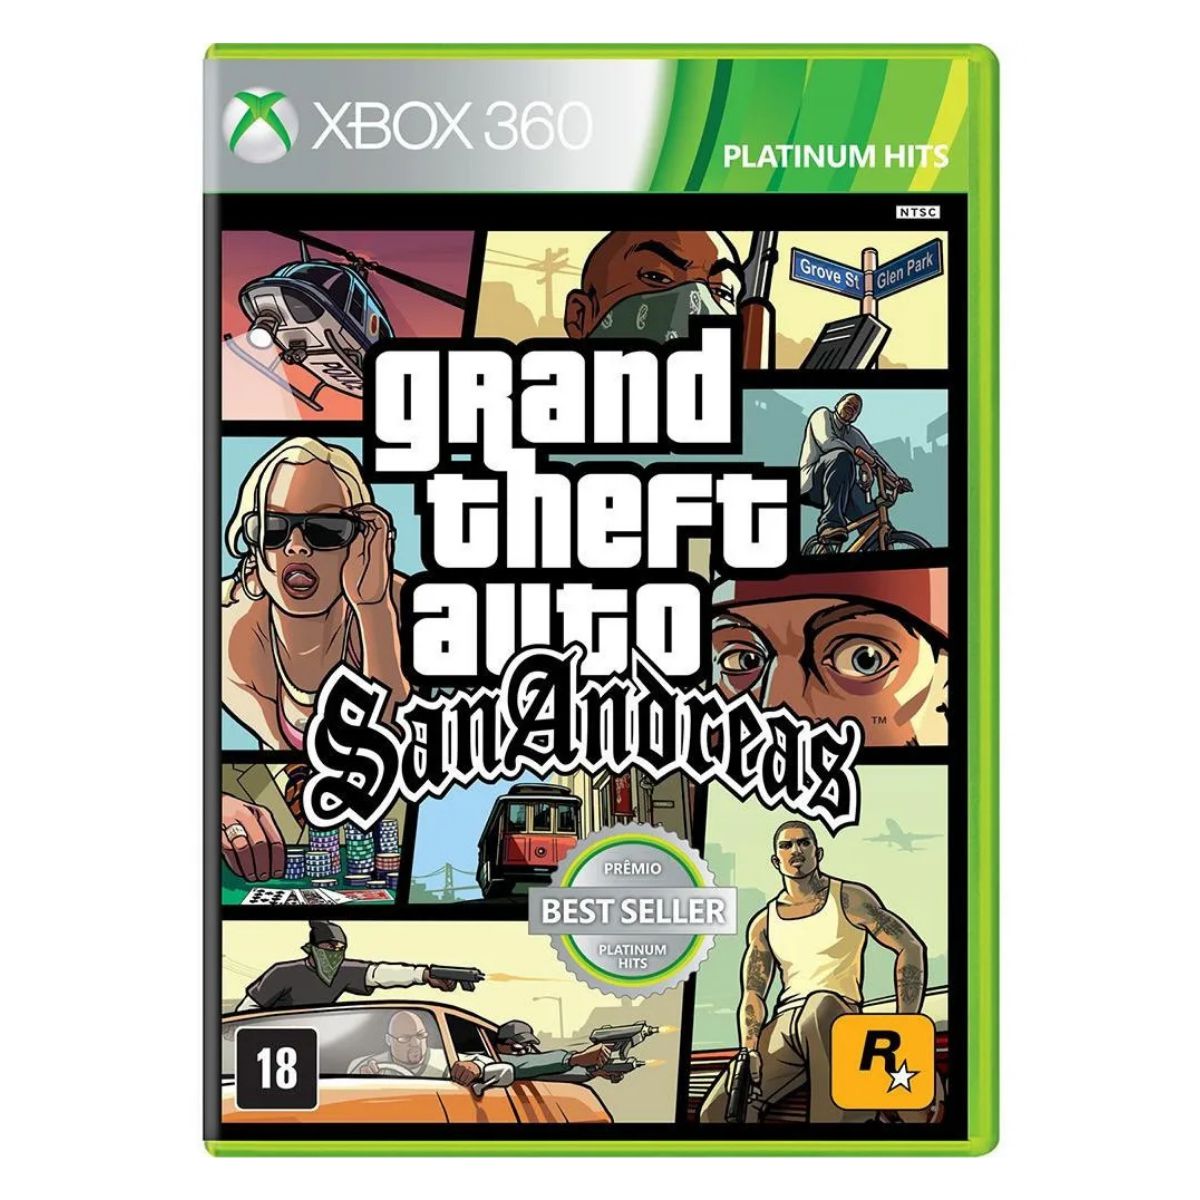 Consoles e Jogos: Codigos do GTA V para Xbox 360